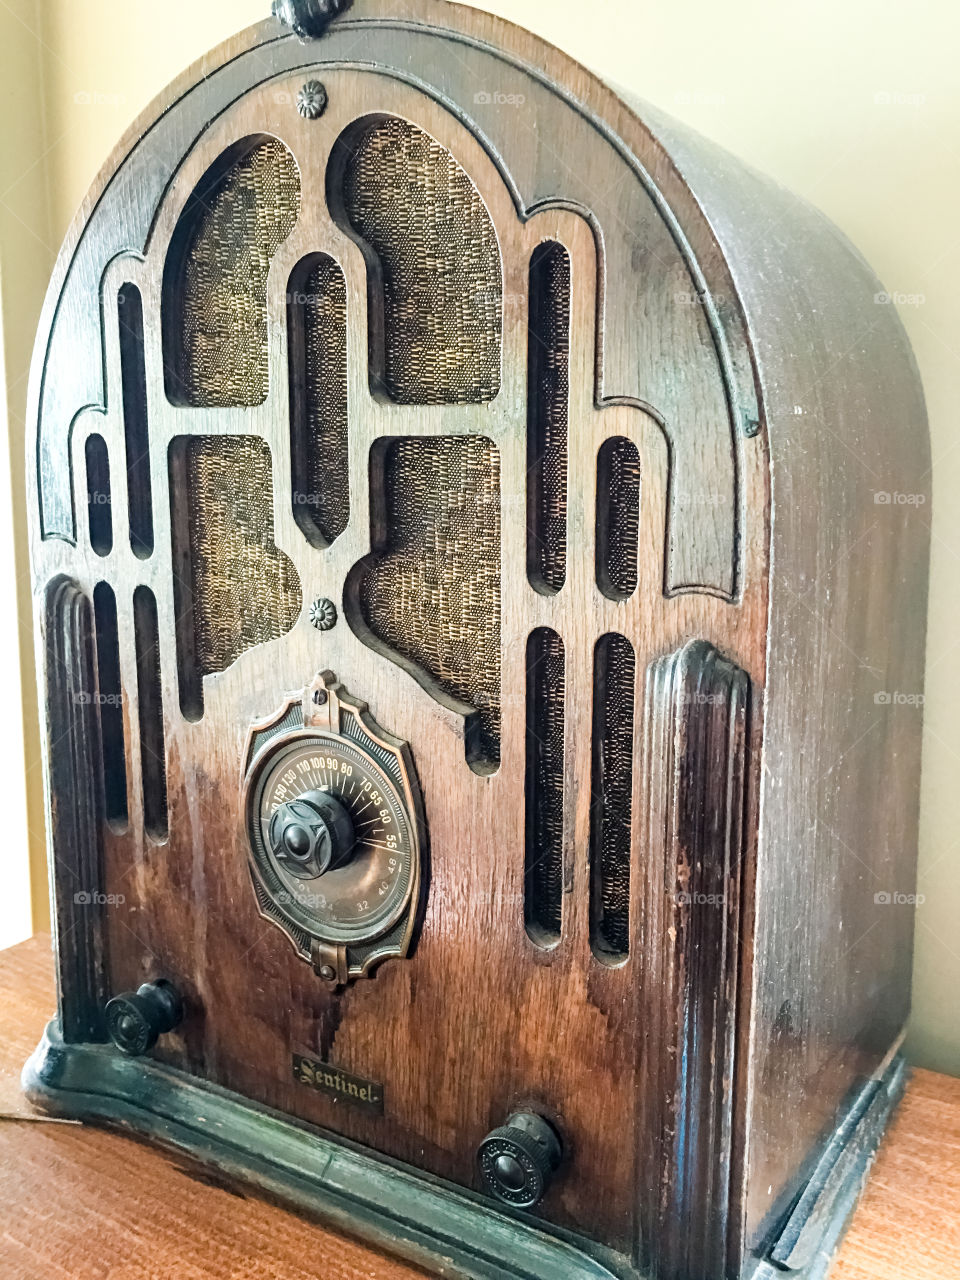 Antique wood table top radio